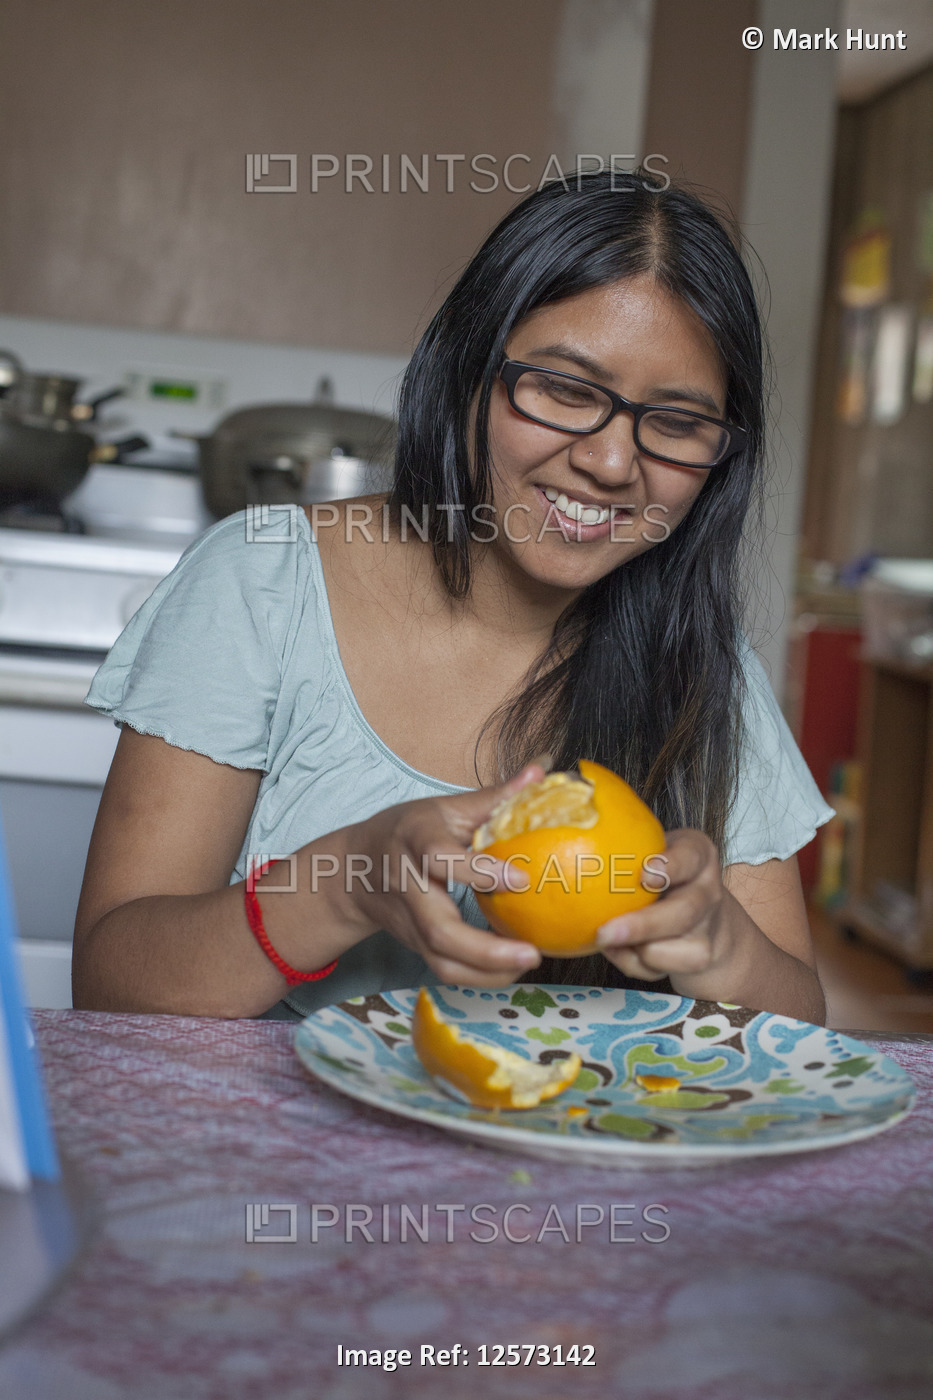 Woman with Visual Impairment peeling an orange